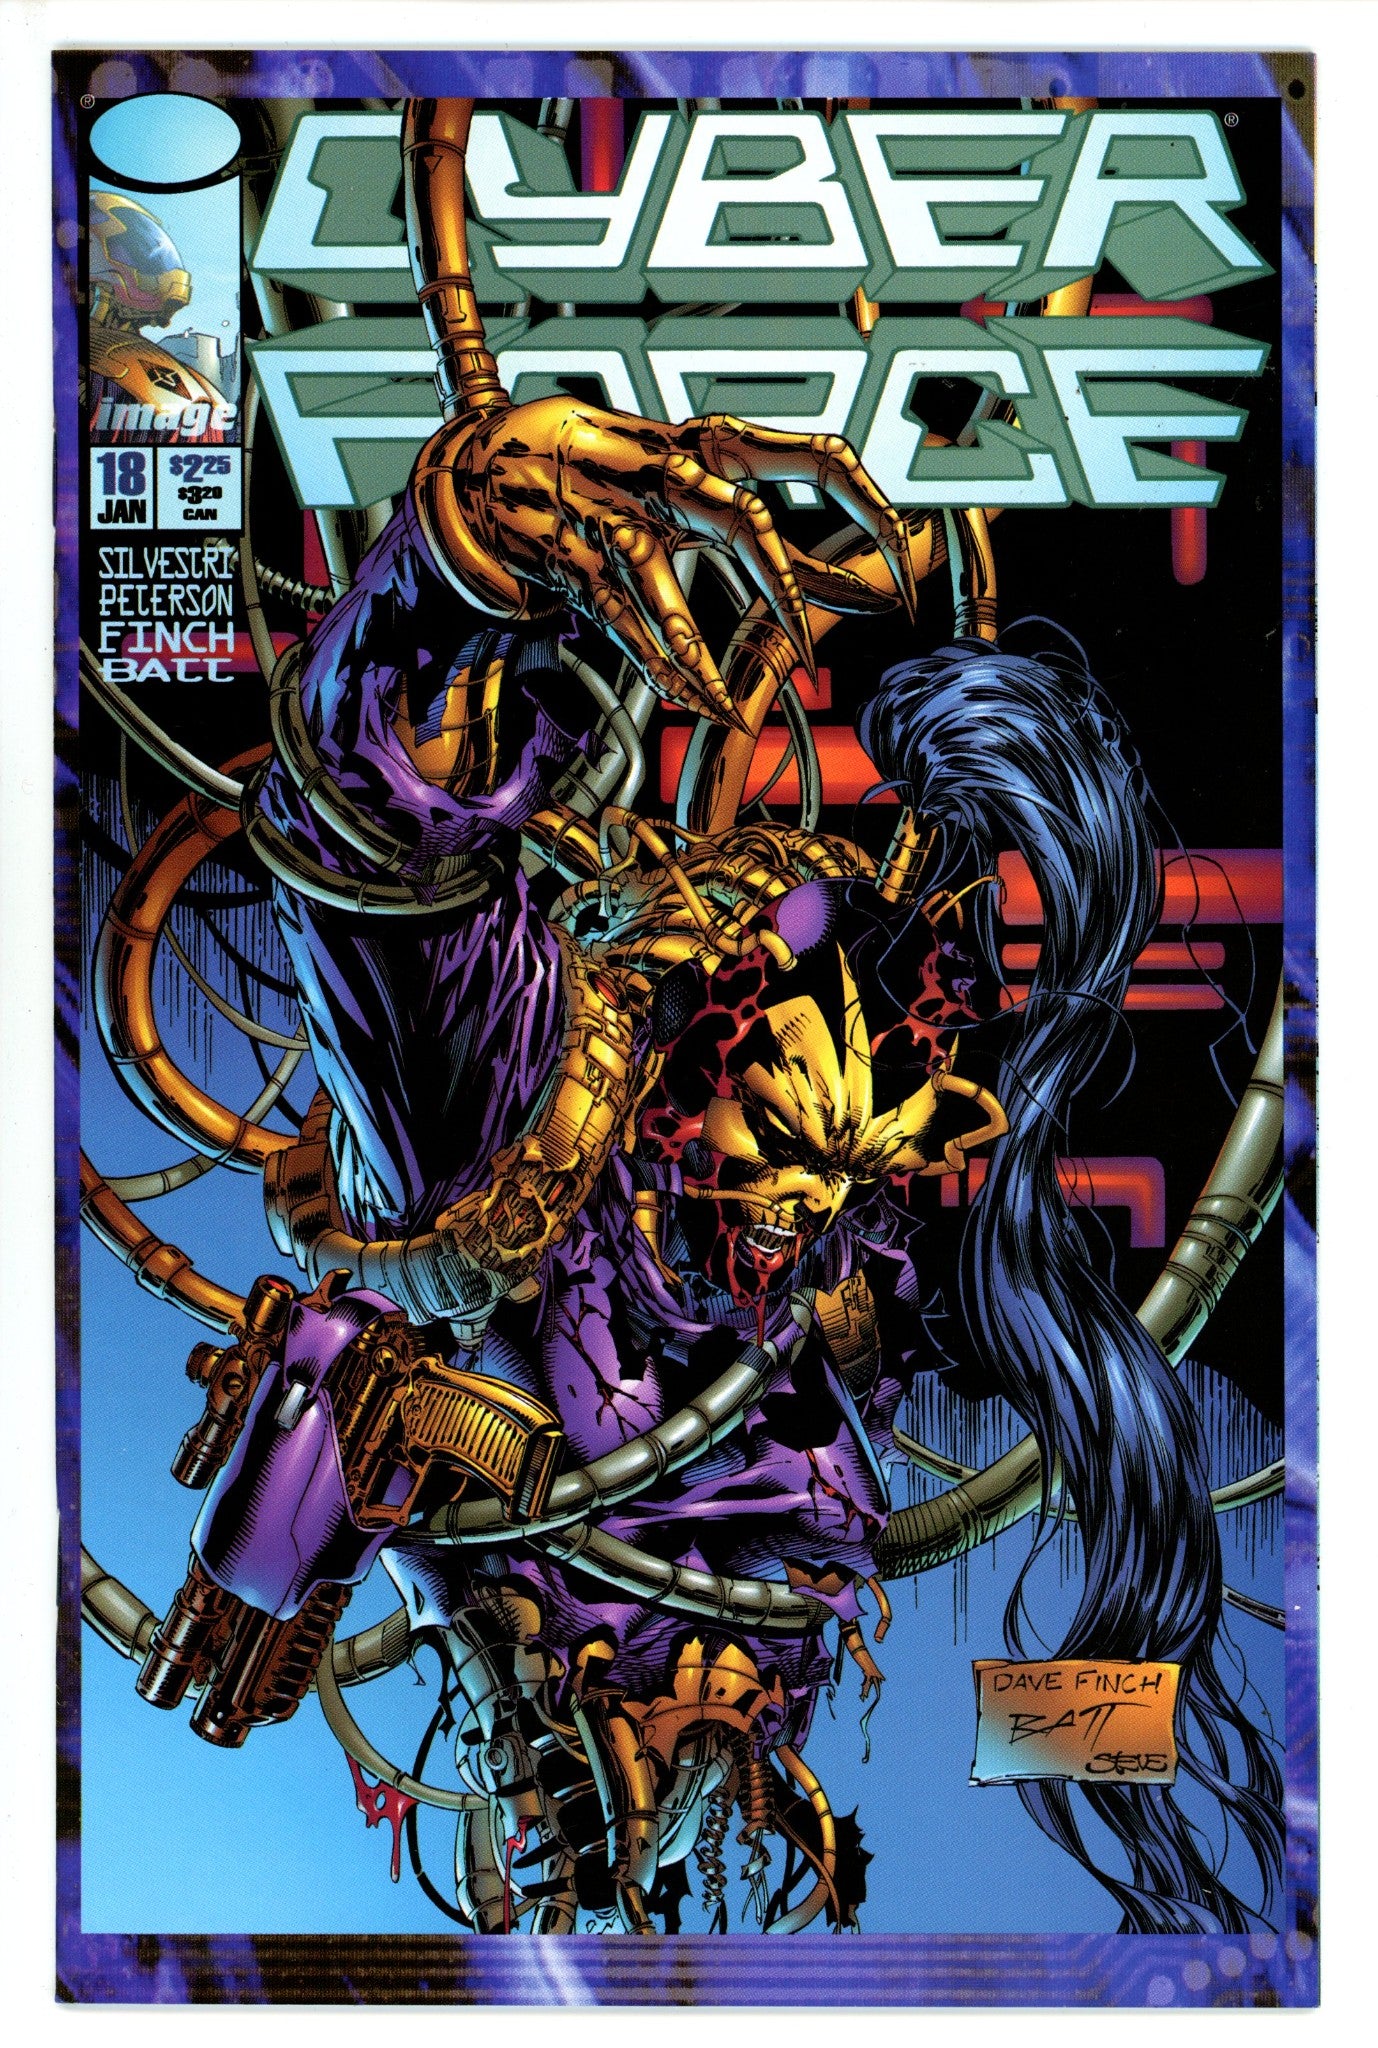 Cyberforce Vol 2 18 (1996)